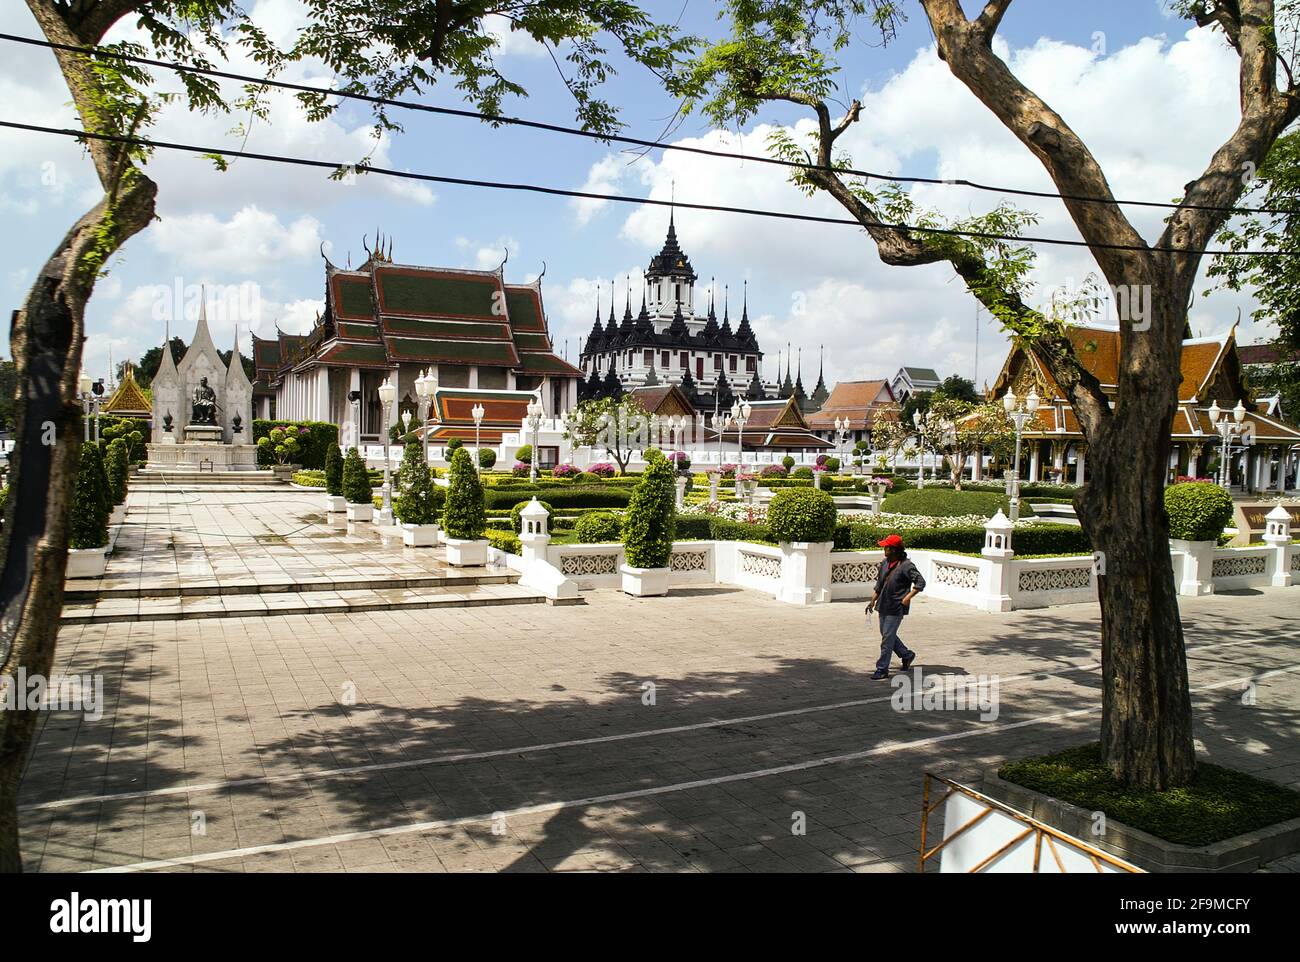 Jardin du Grand Palais, พระบรมมหาราชวัง. Statue de Rama III, à gauche. Bangkok, Thaïlande. Personne non identifiée. RMN Banque D'Images